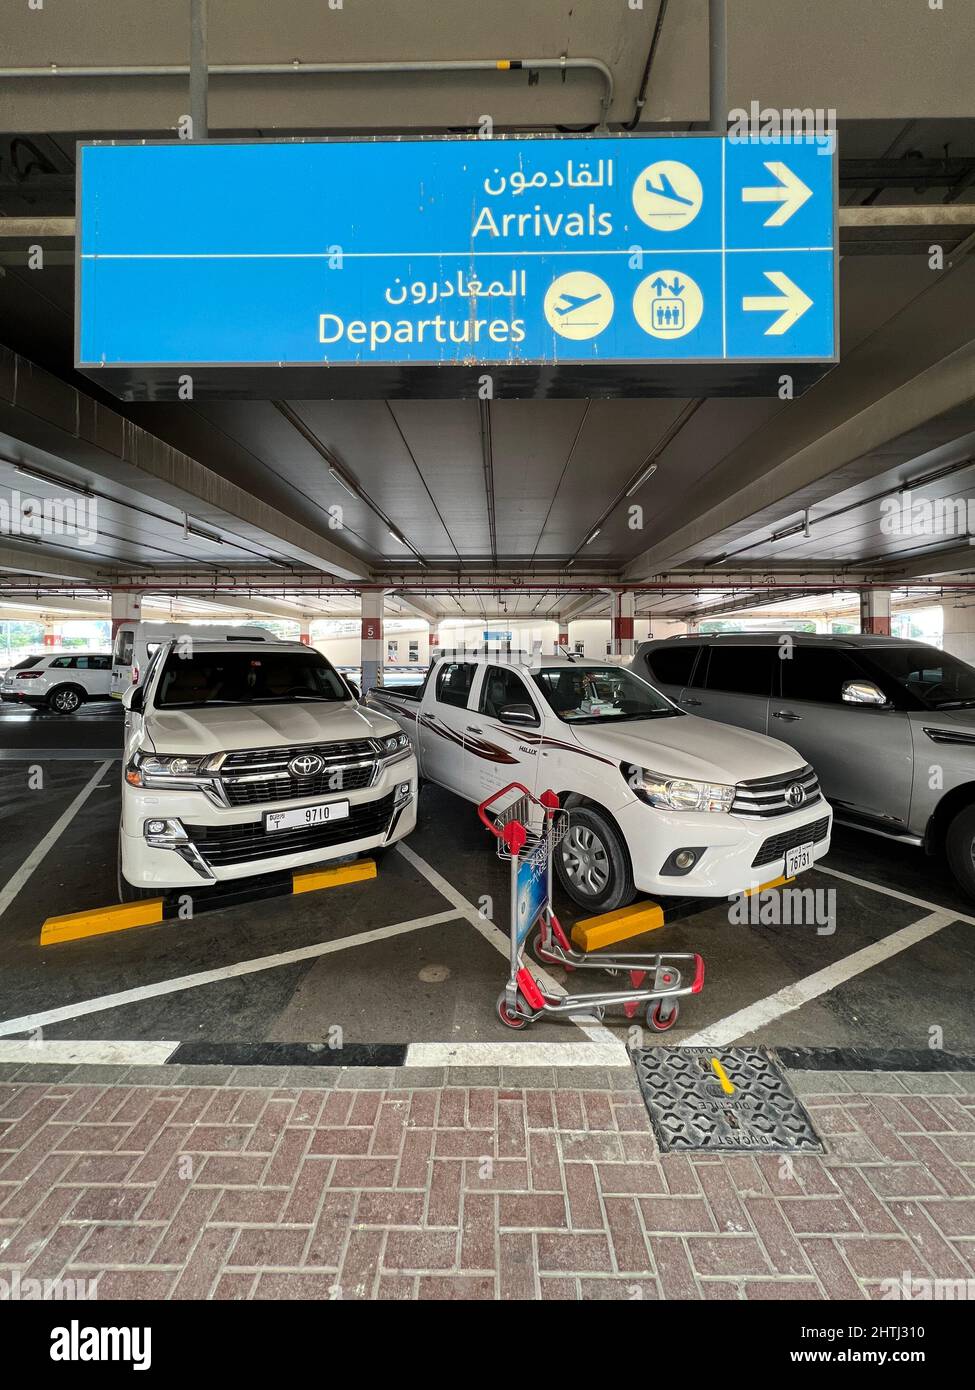 UAE, Dubai - December 02, 2021: Toyota Land Cruiser 200 Series Restyling 2 Excalibur front view, three quarters view, headlight off Stock Photo